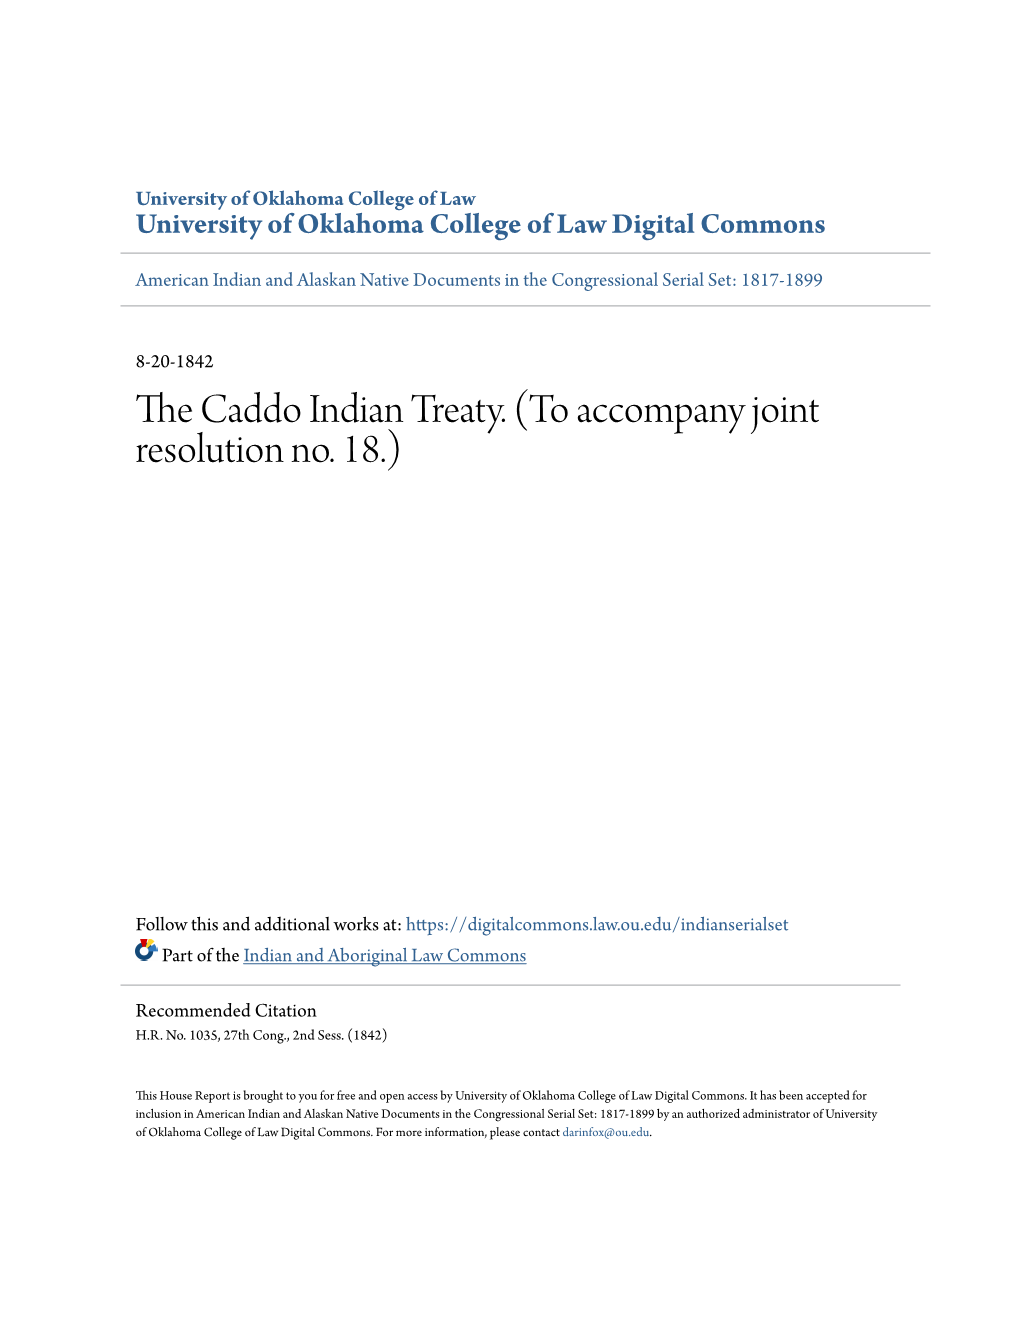 The Caddo Indian Treaty. (To Accompany Joint Resolution No. 18.)